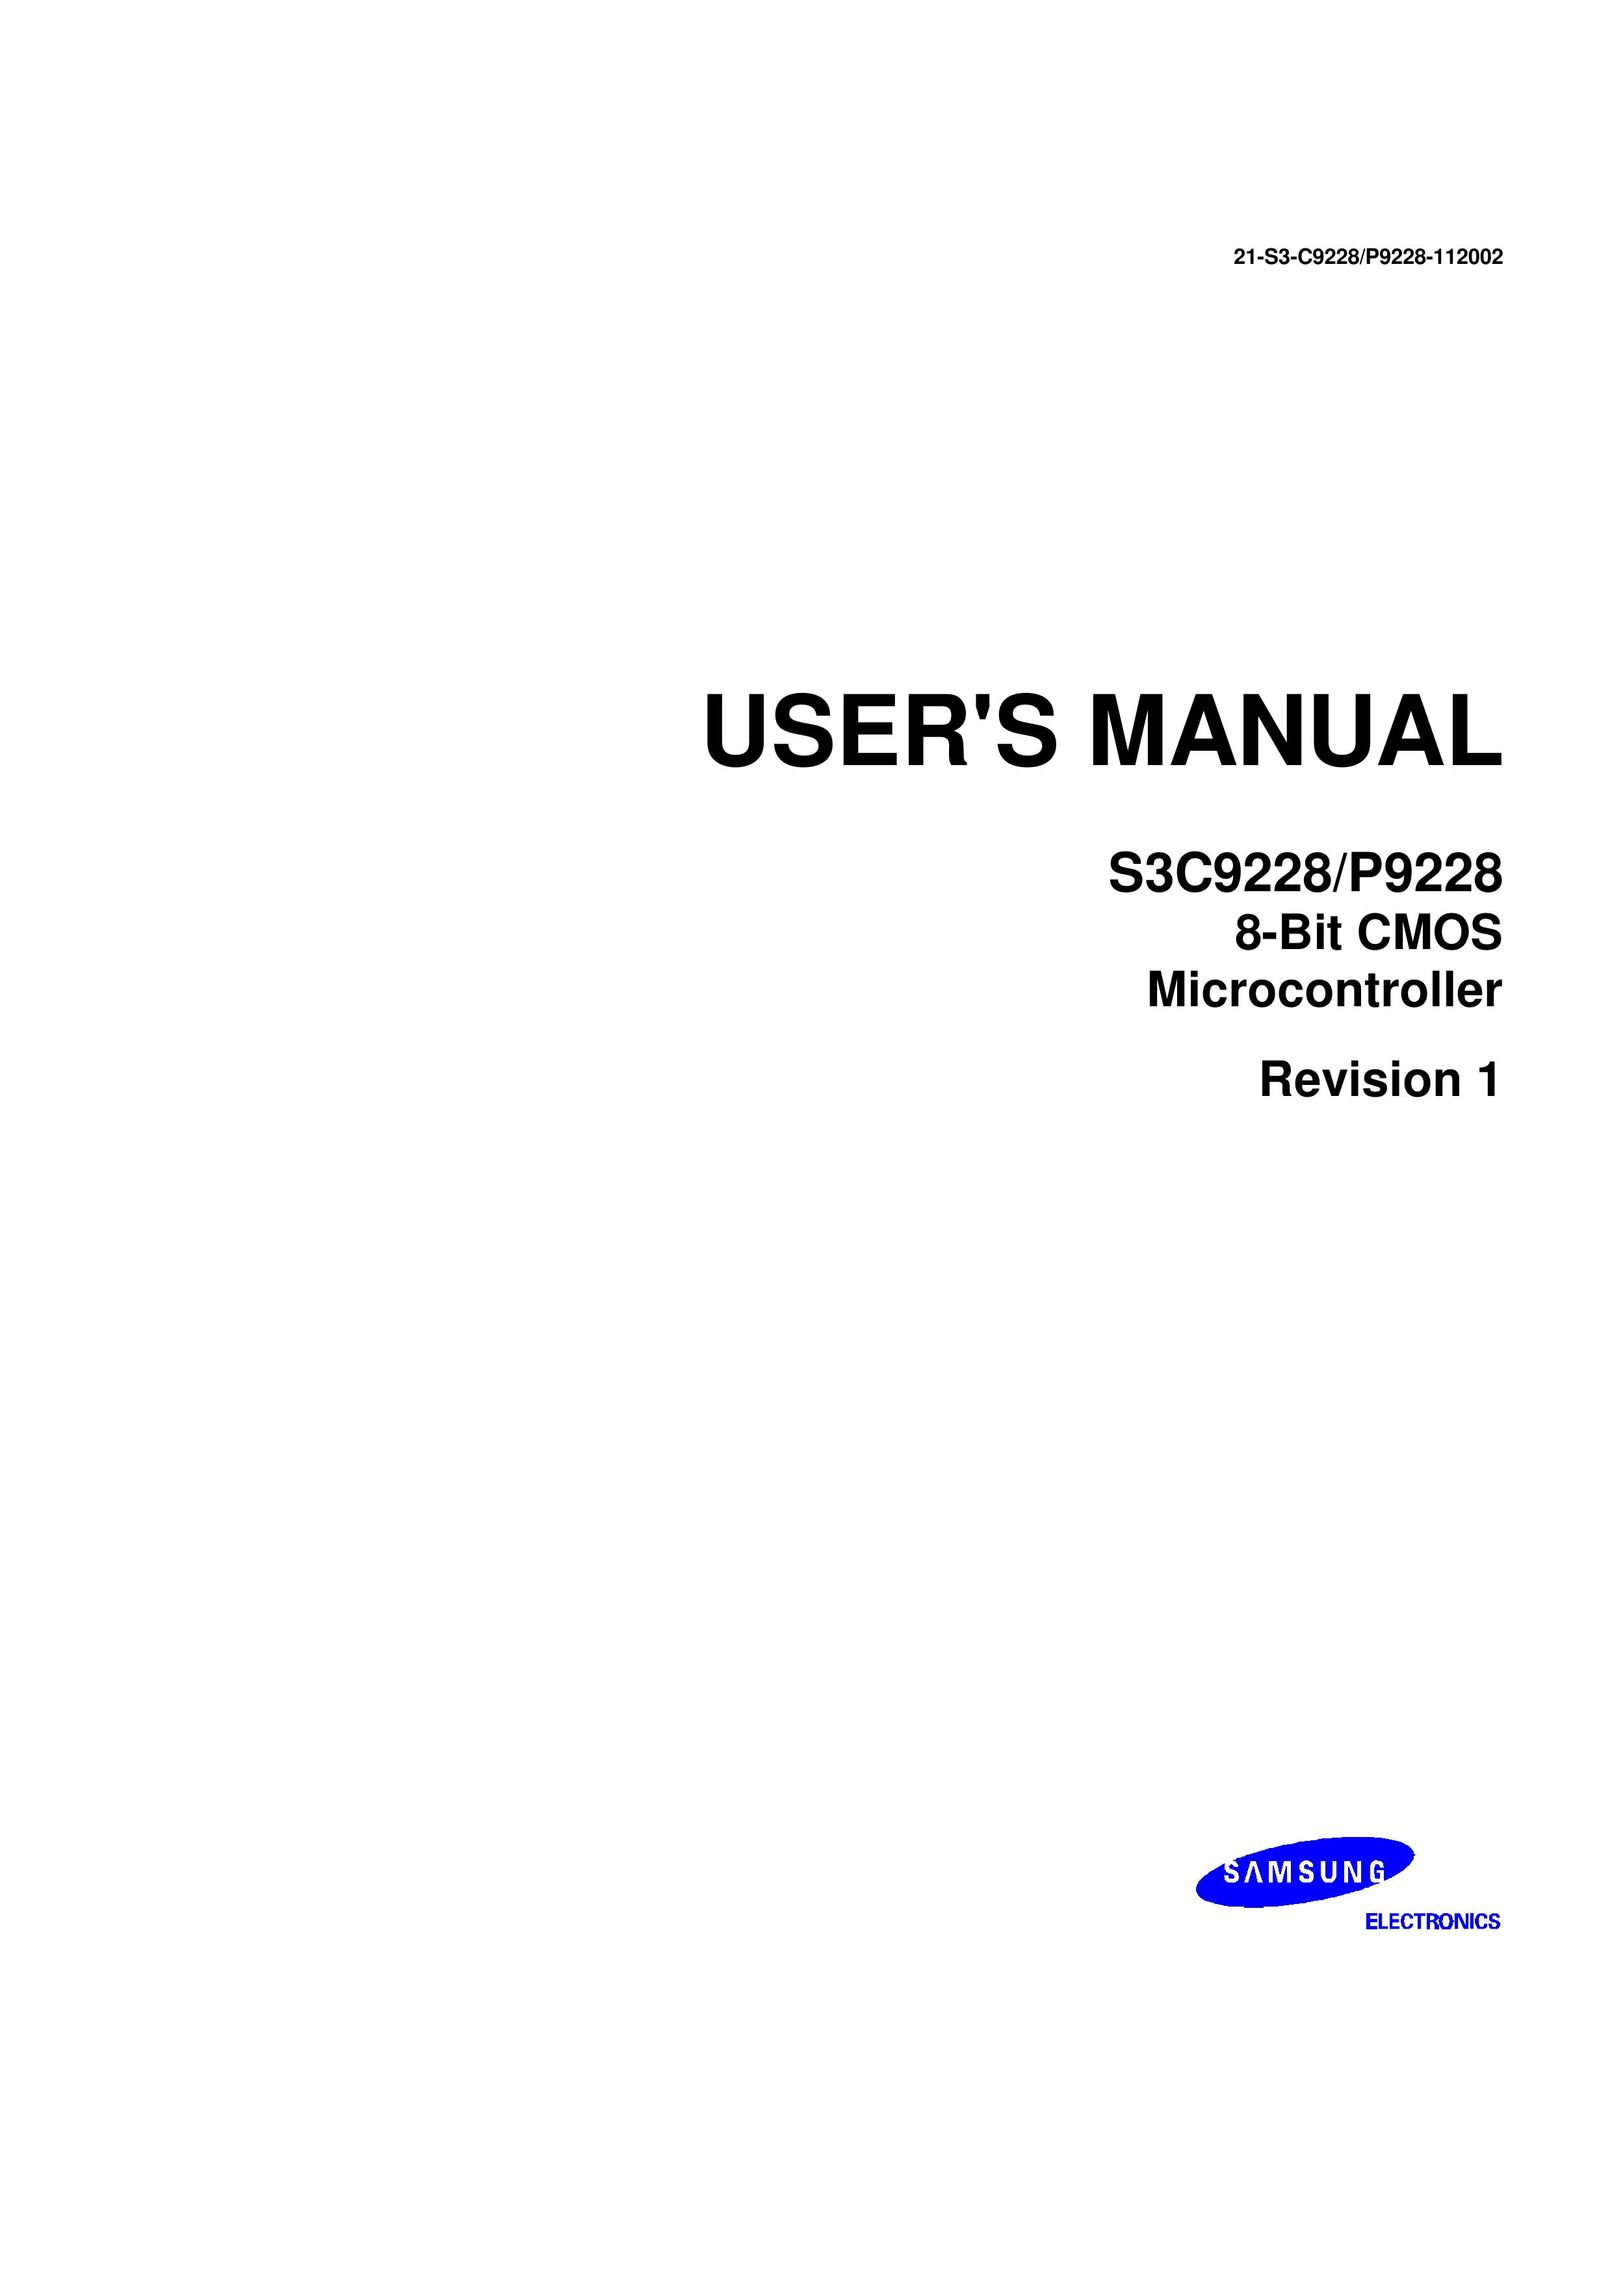 Samsung S3C9228/P9228 Microcassette Recorder User Manual